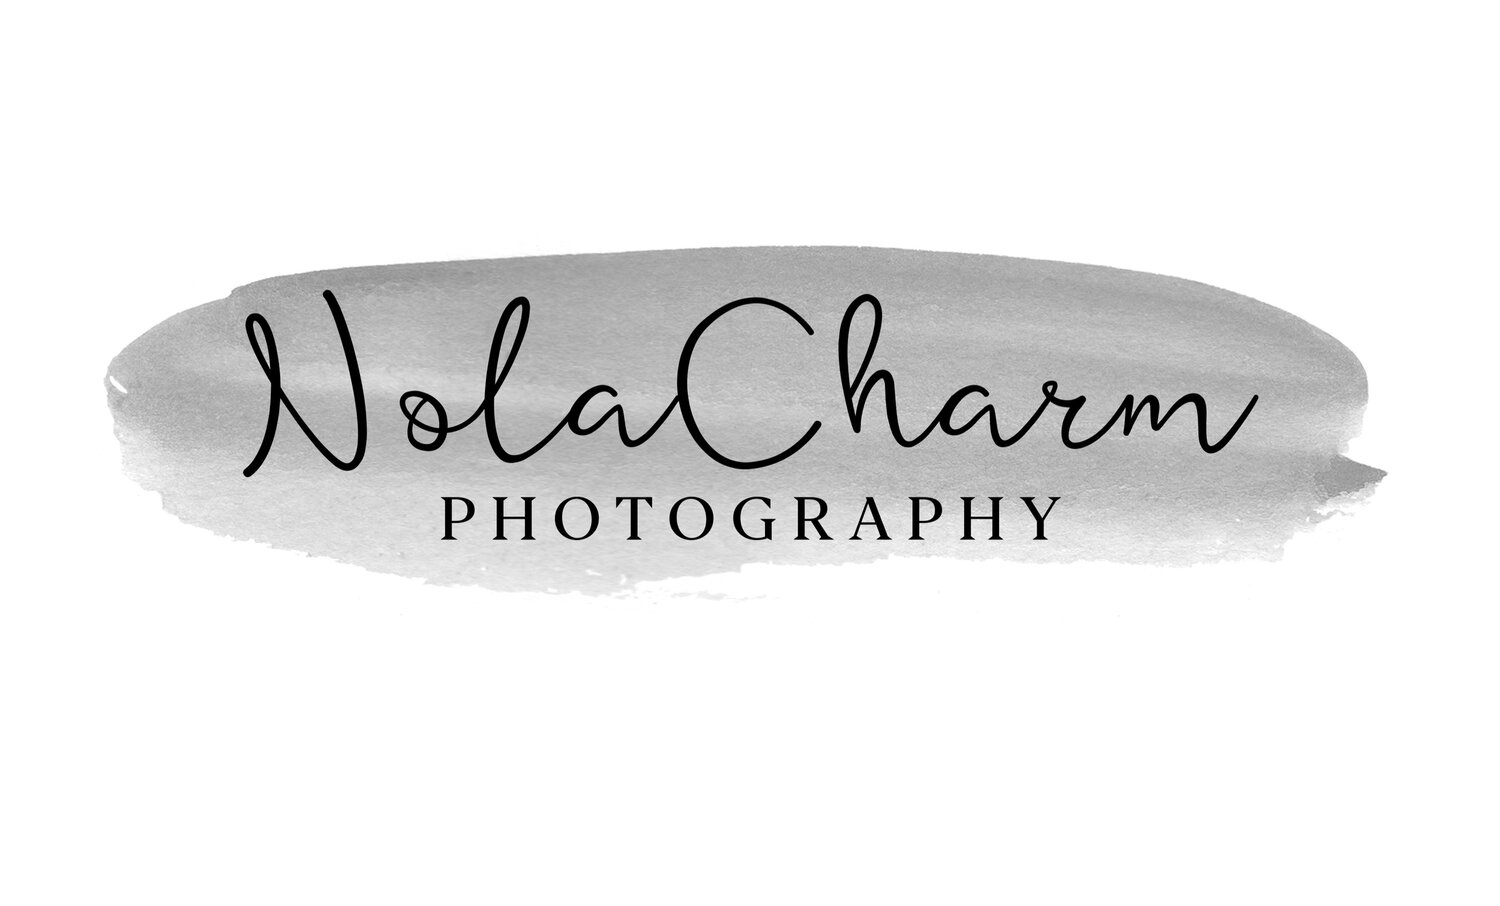 NolaCharm Photography